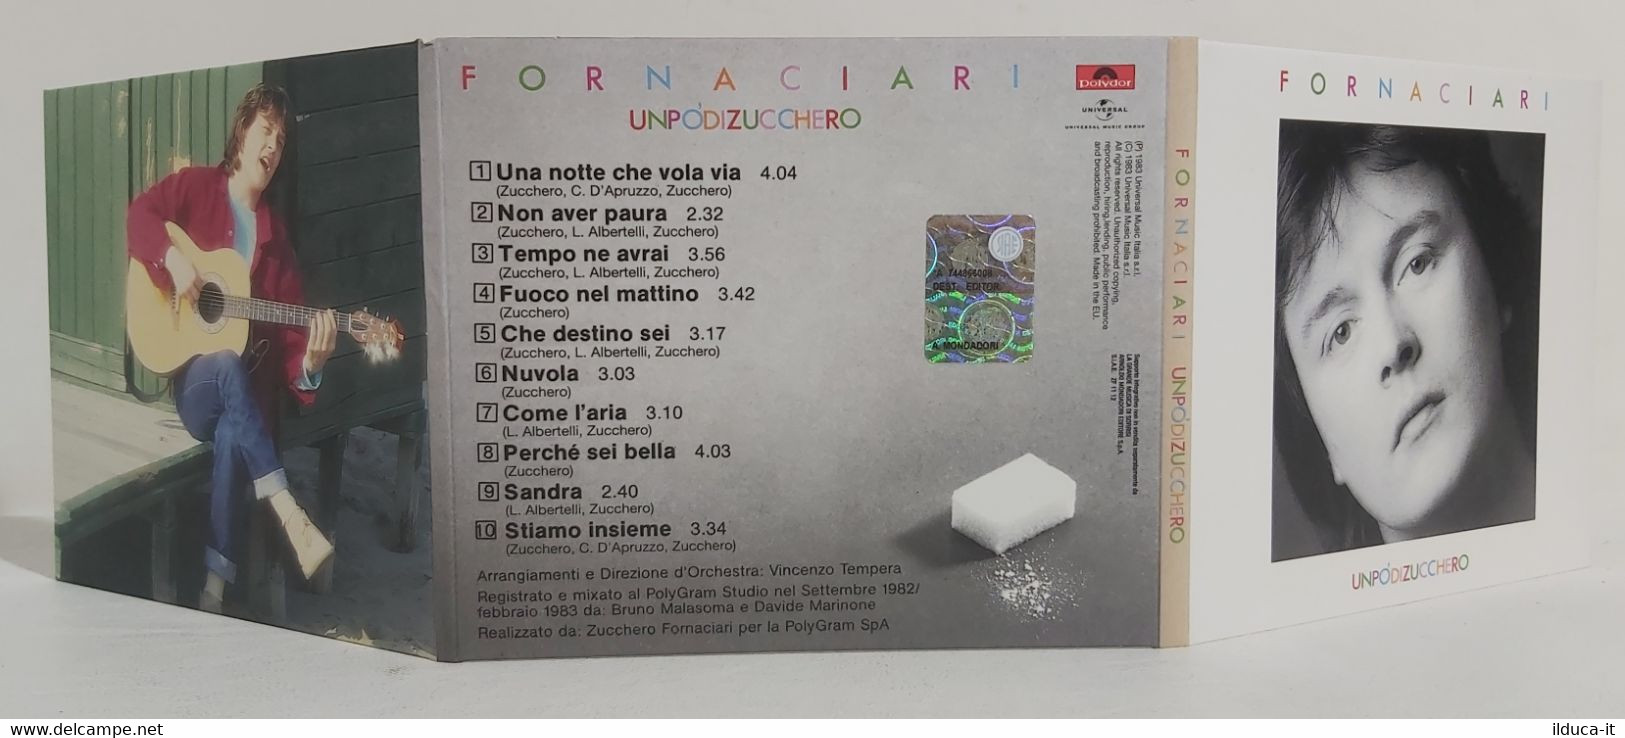 I106660 CD Digipak - Zucchero Sugar Fornaciari - Un Po' Di Zucchero - Other - Italian Music